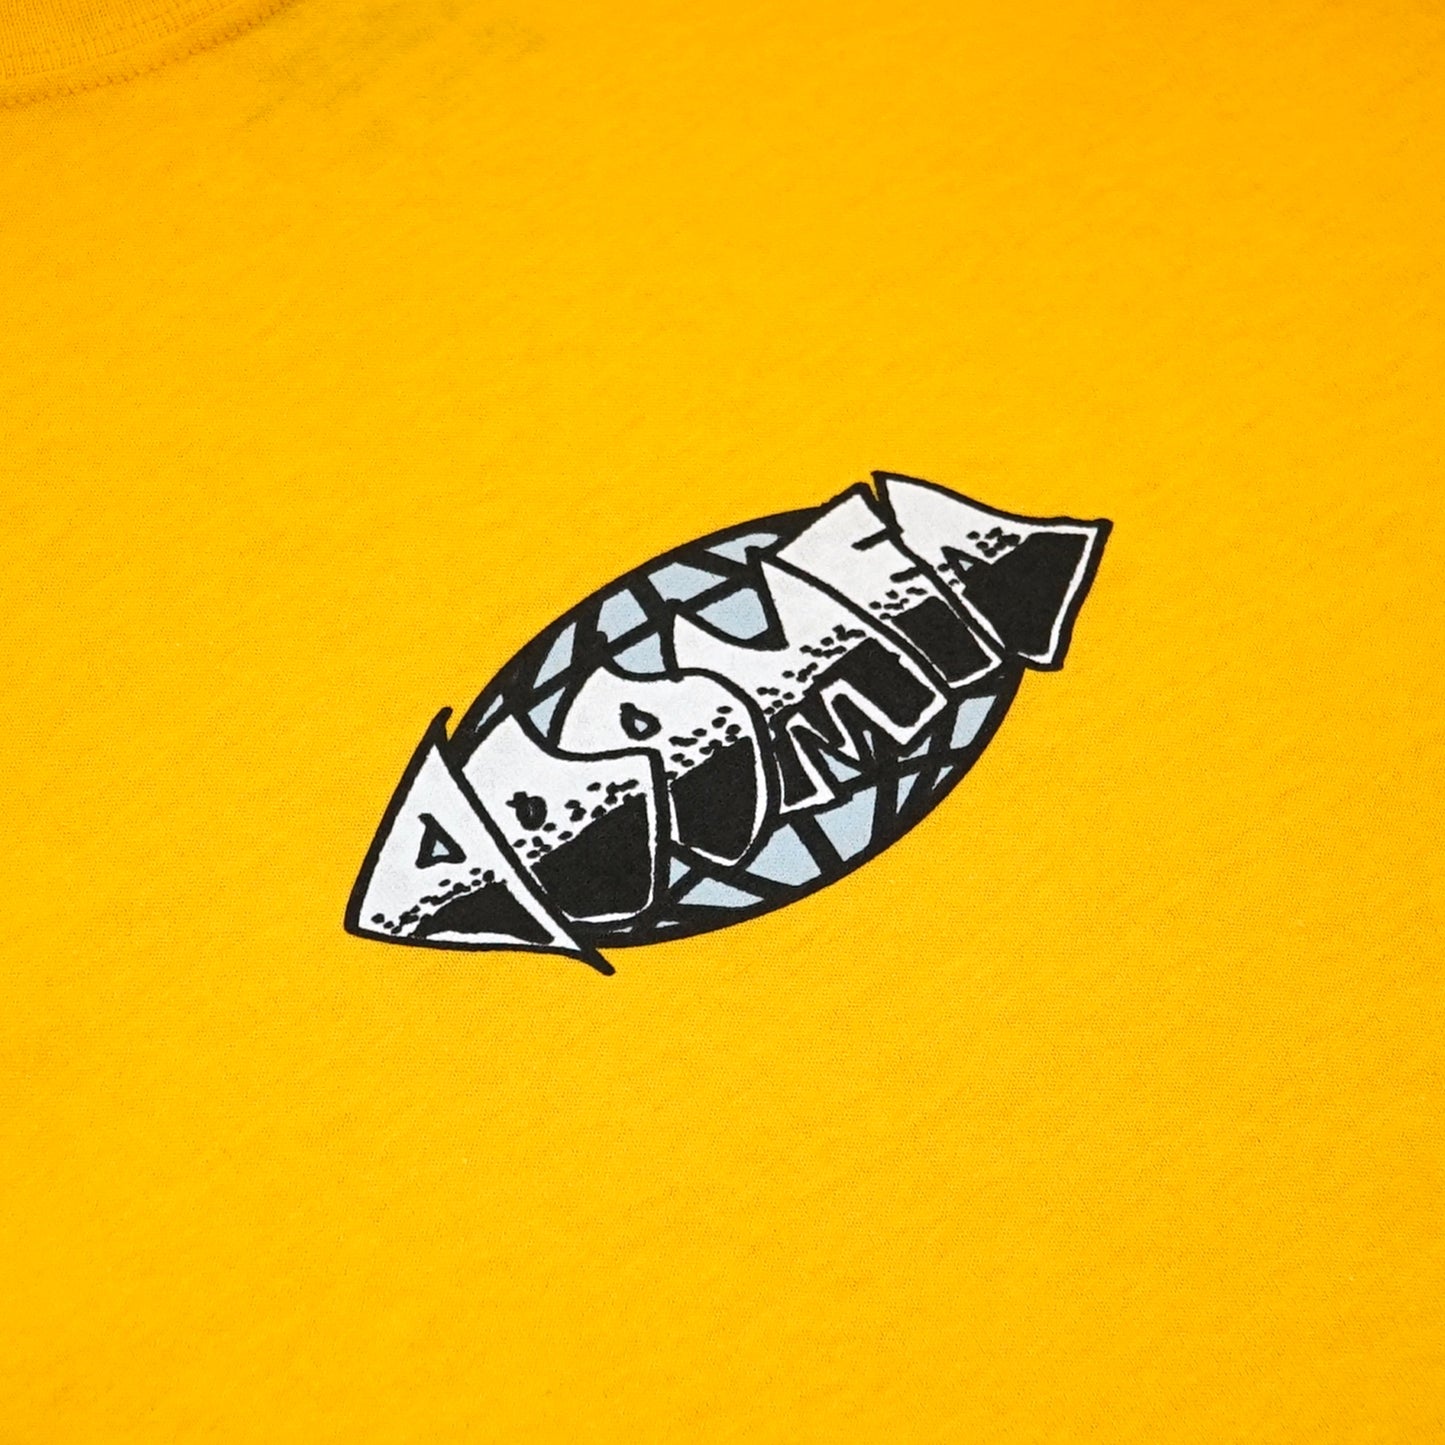 DOOMED - Earth T-Shirt/Gold